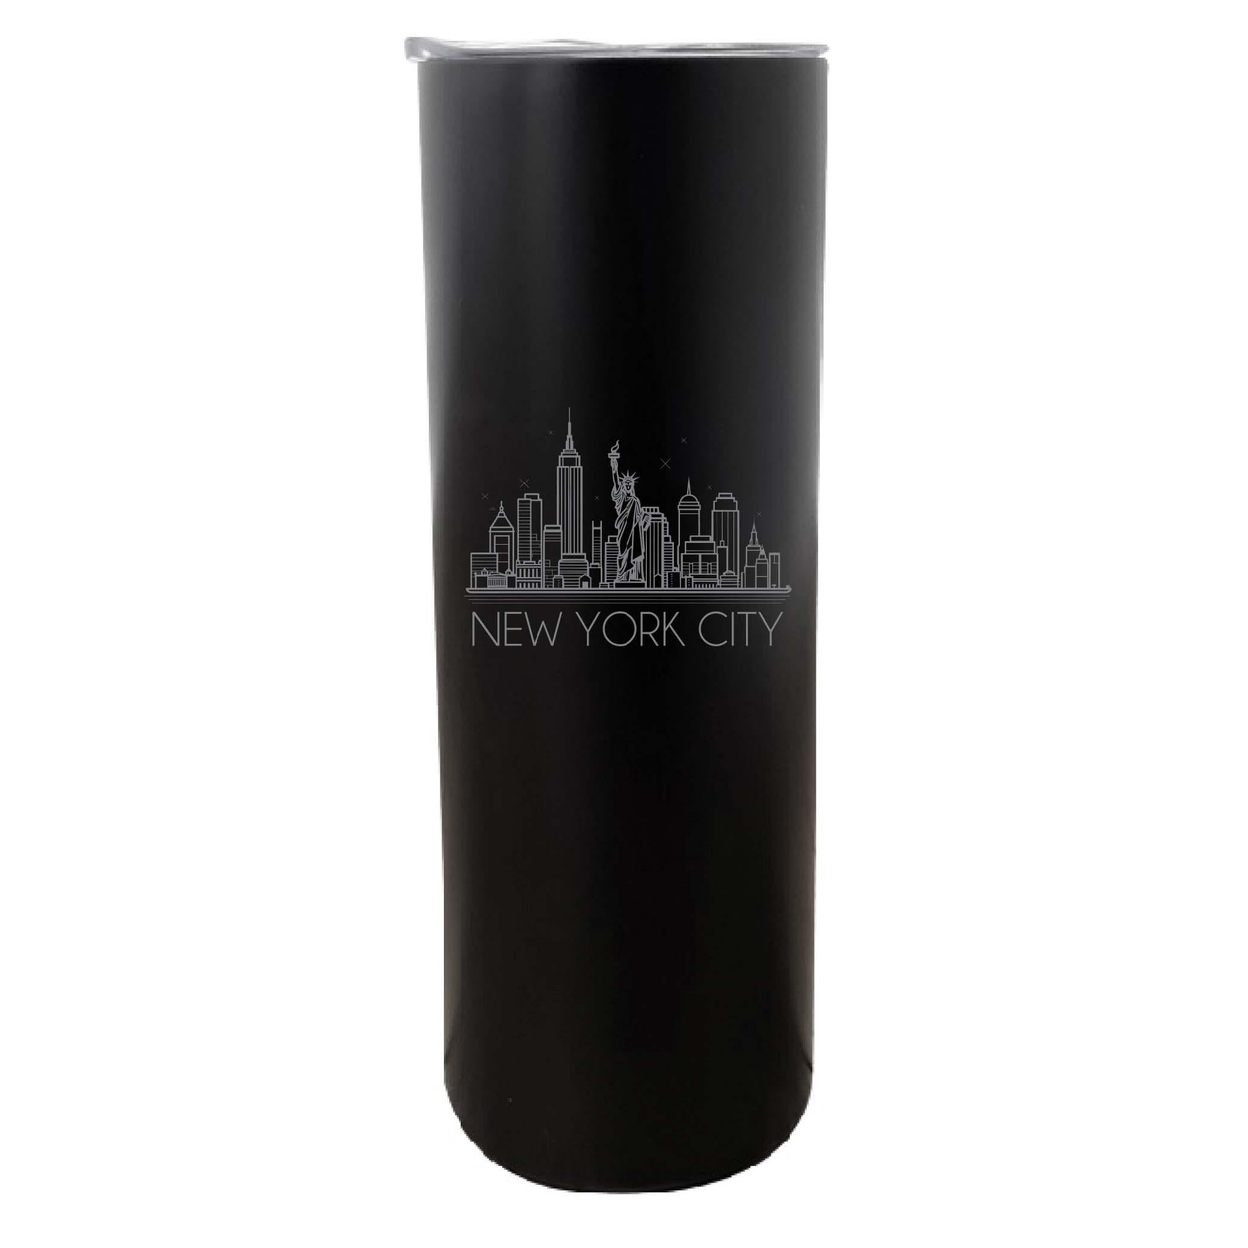 New York City Souvenir 20 Oz Engraved Insulated Skinny Tumbler Glitter - Black,,Single Unit